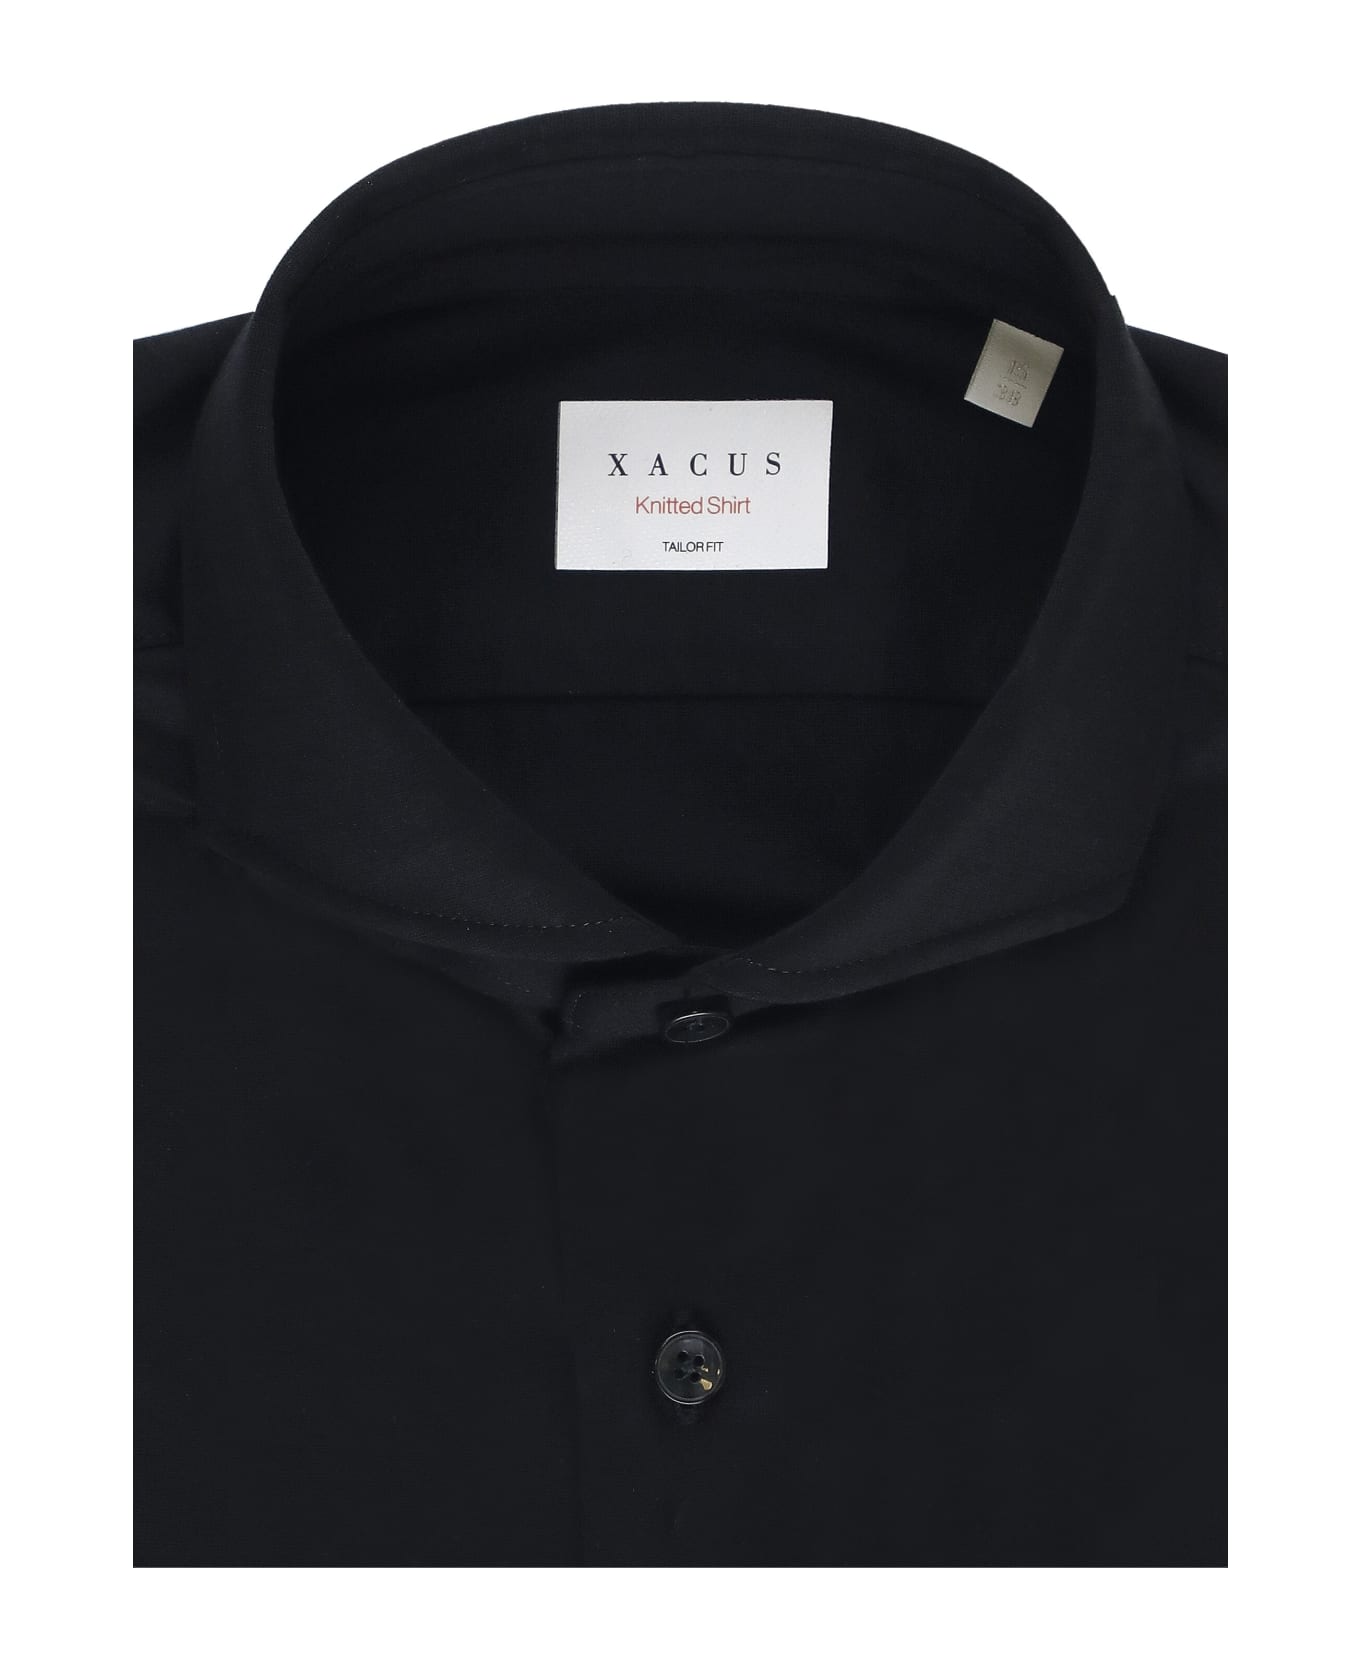 Xacus Knitted Shirt - Black シャツ